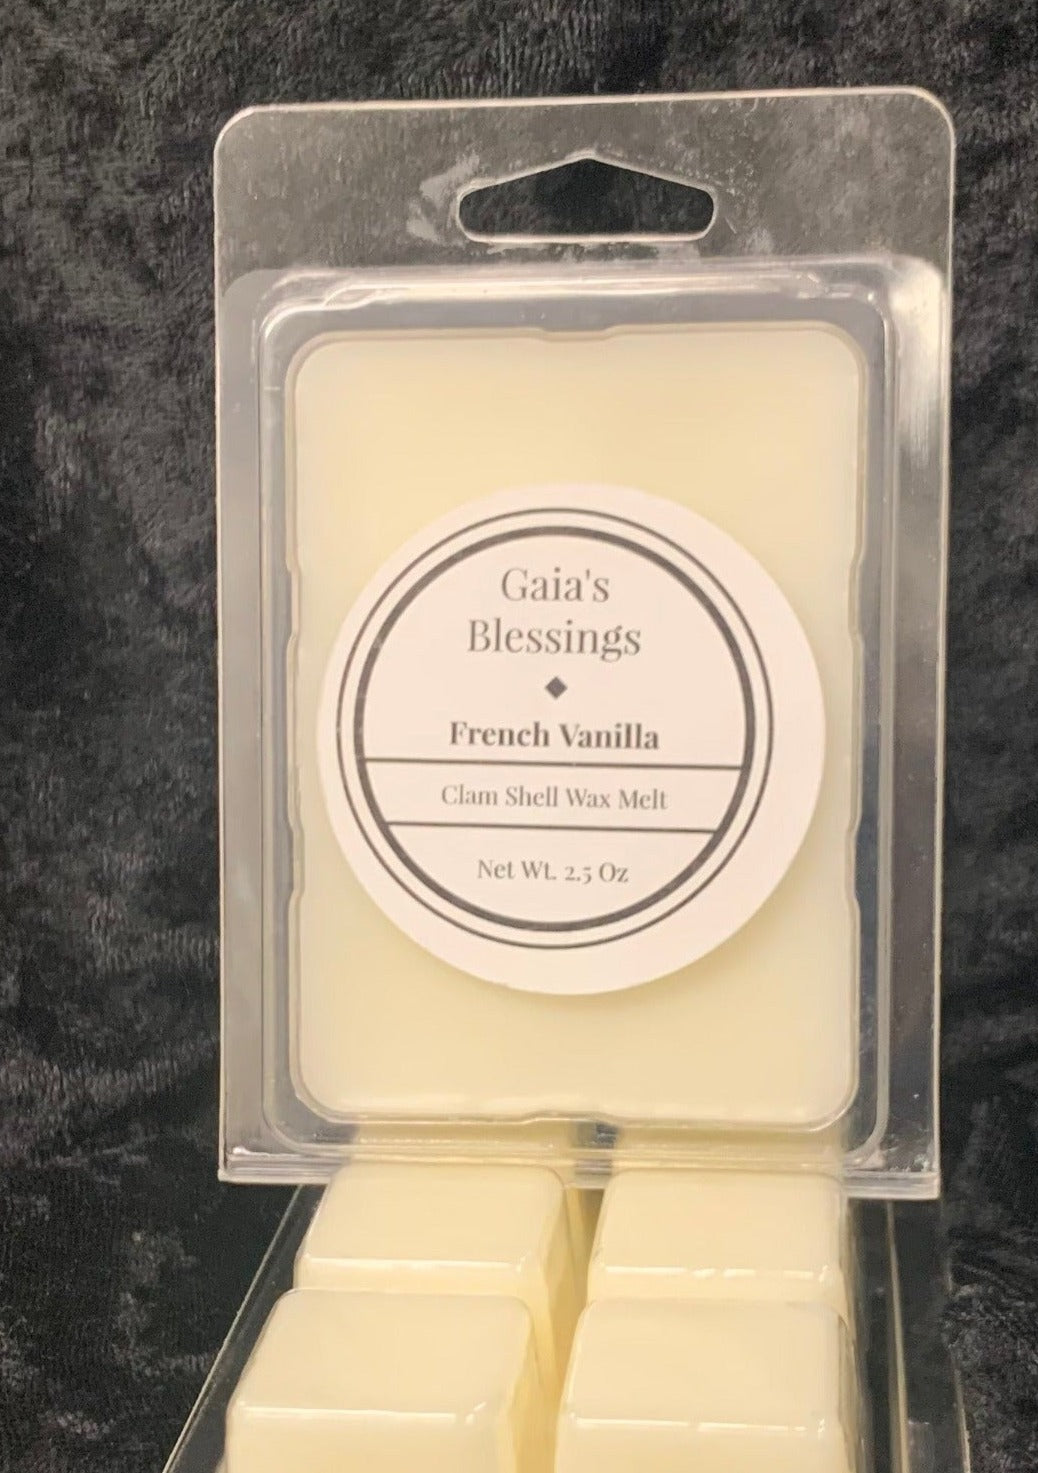 French Vanilla fragrance clam shell wax melt